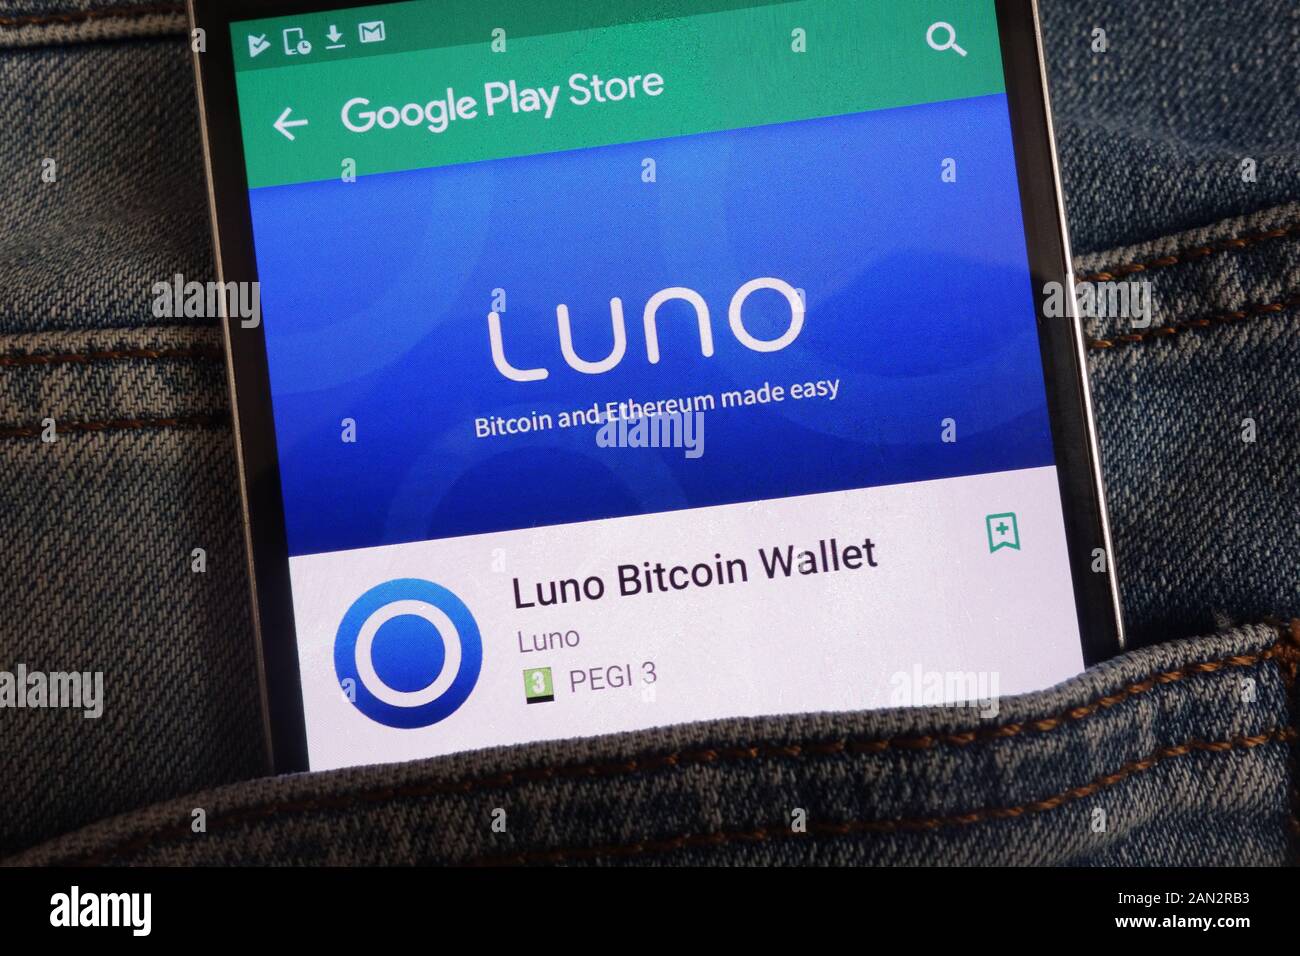 Blockchain.com: Crypto Wallet - Apps on Google Play